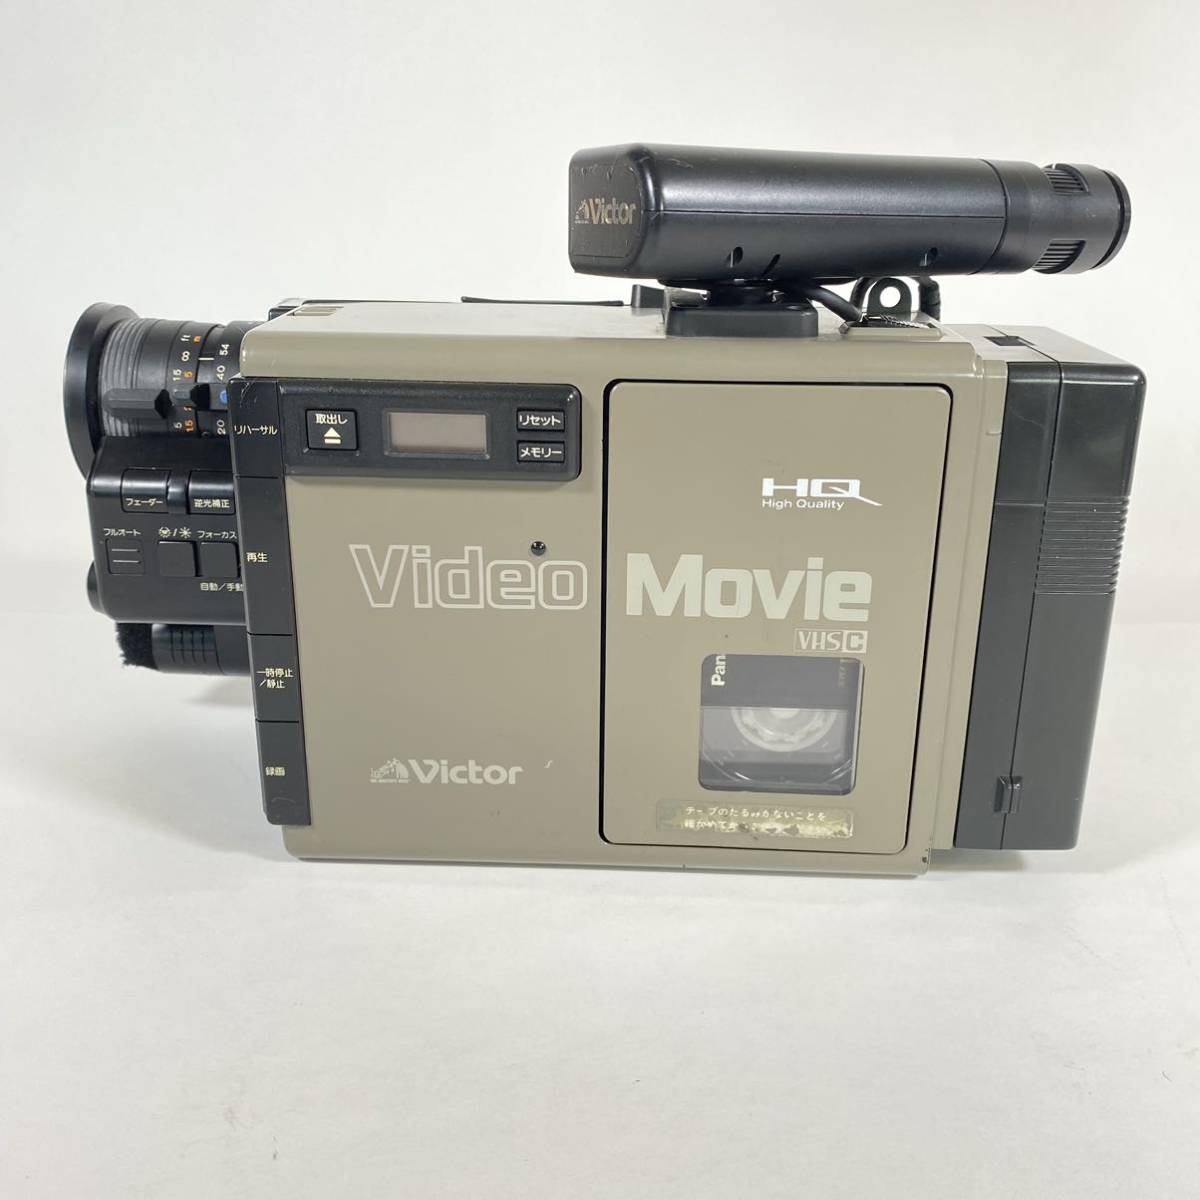 Victor Victor видео Movie BR-C300 камера VHSC текущее состояние товар Junk T2804